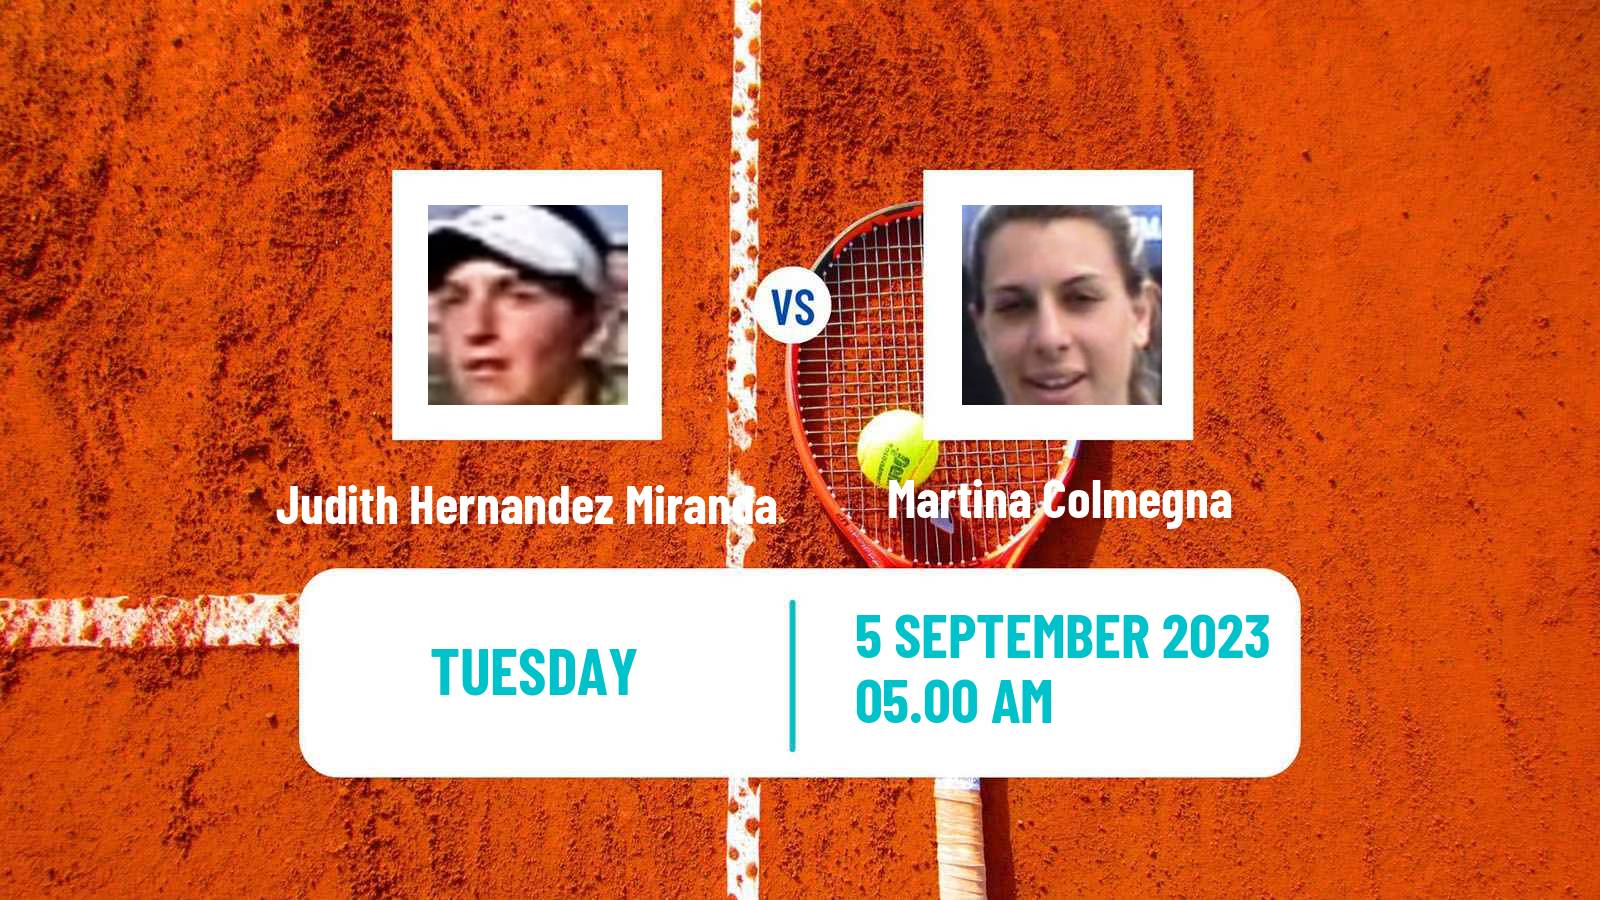 Tennis ITF W25 Zaragoza Women Judith Hernandez Miranda - Martina Colmegna